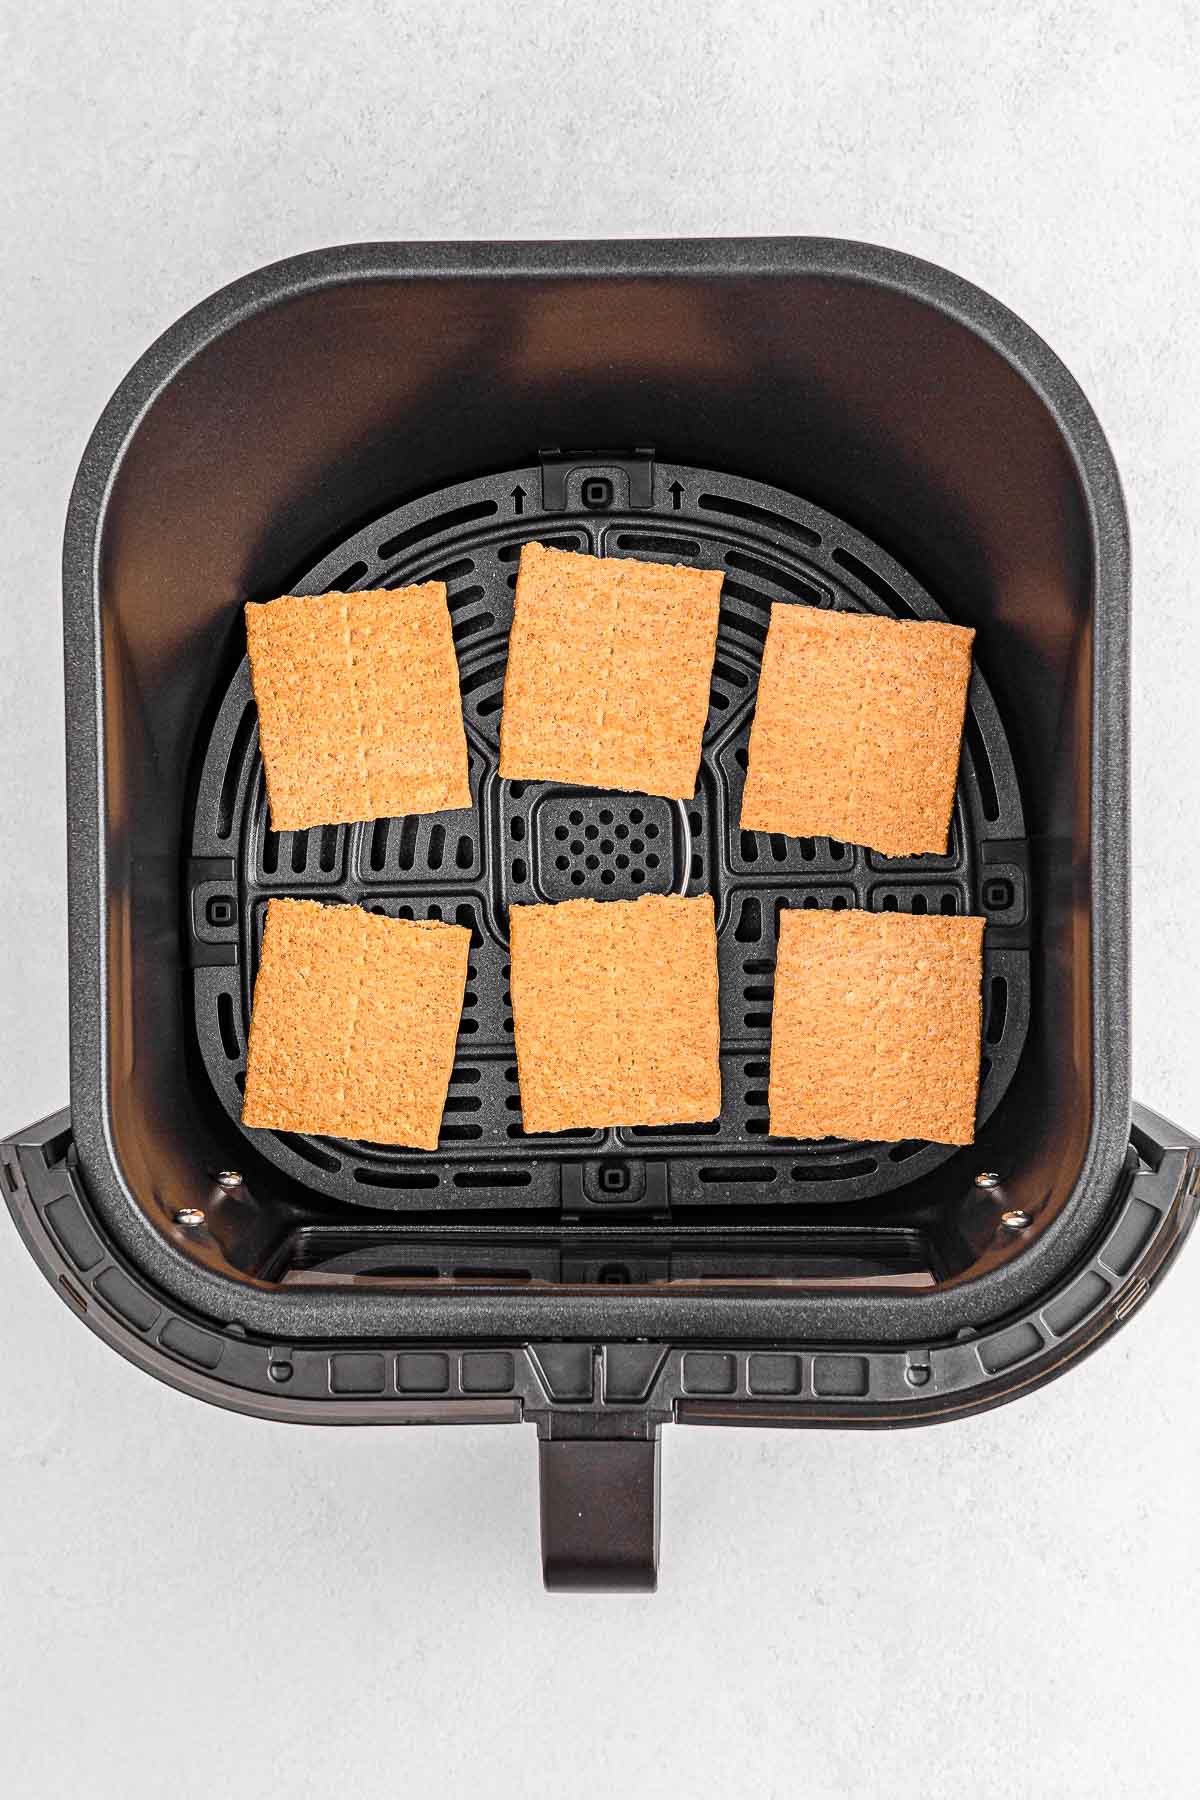 Graham crackers in air fryer.